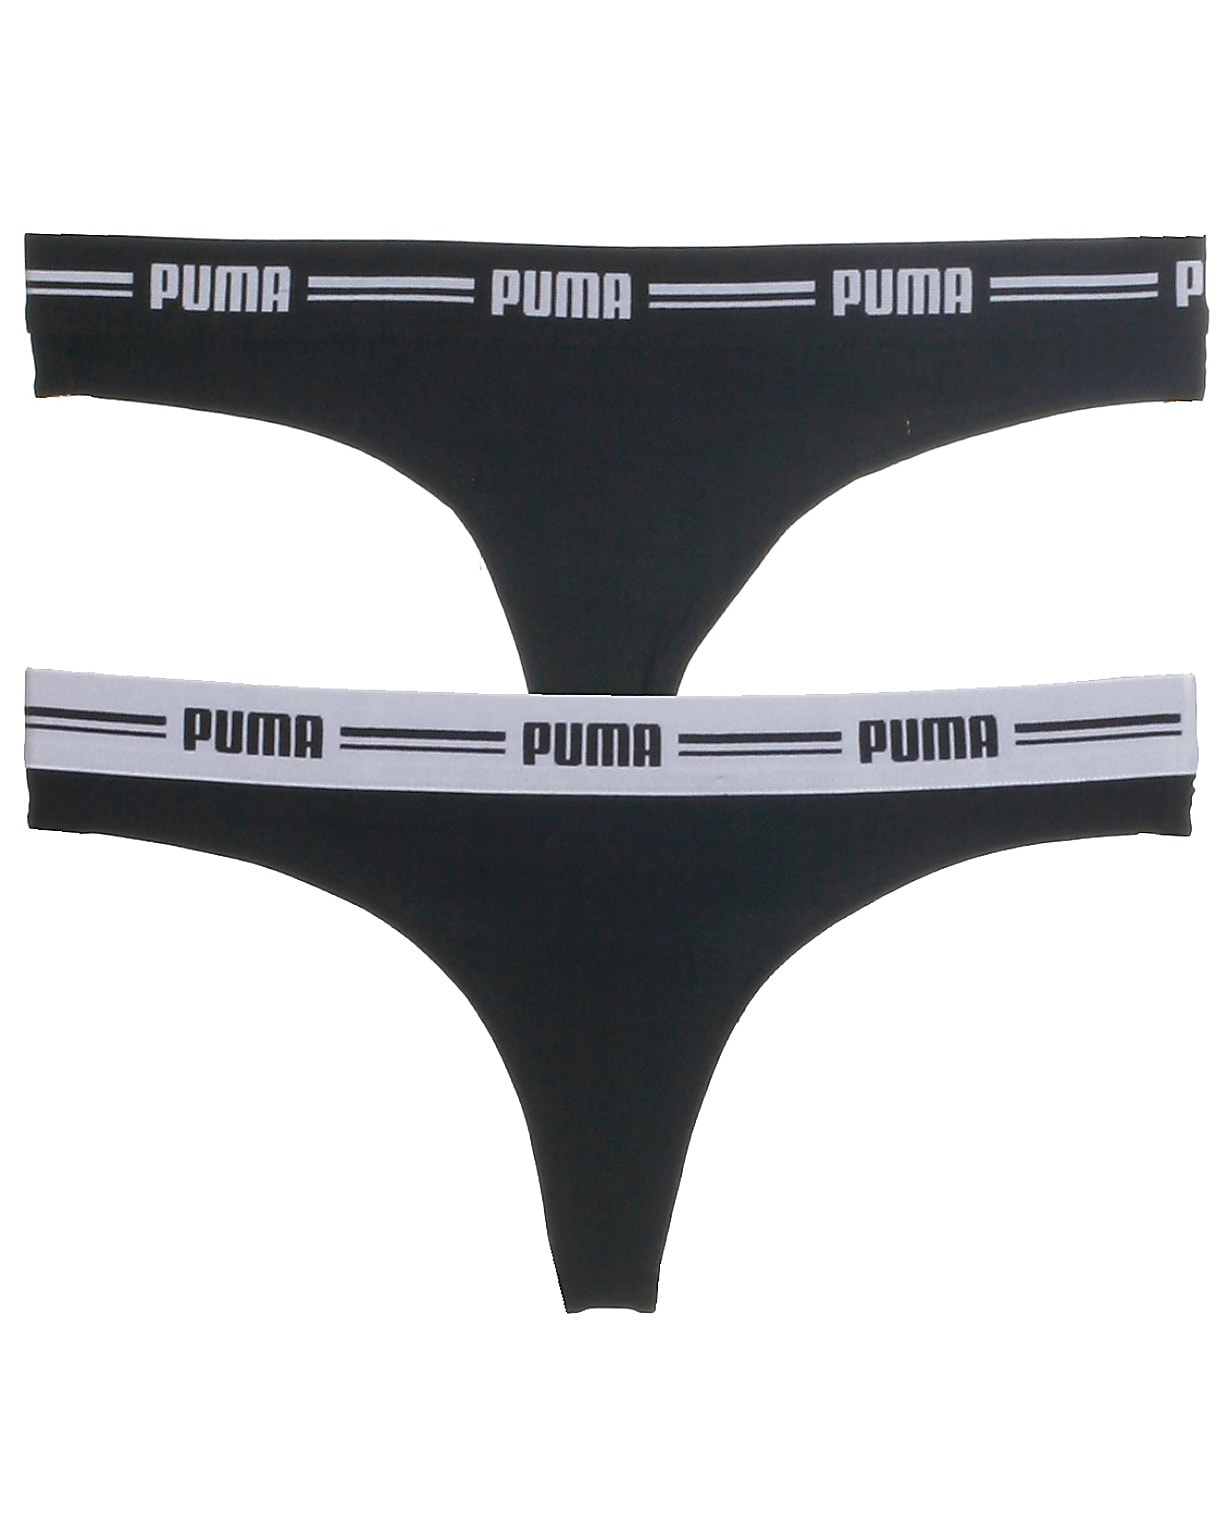 Puma g-streng, sort. Find alt undertøj her!